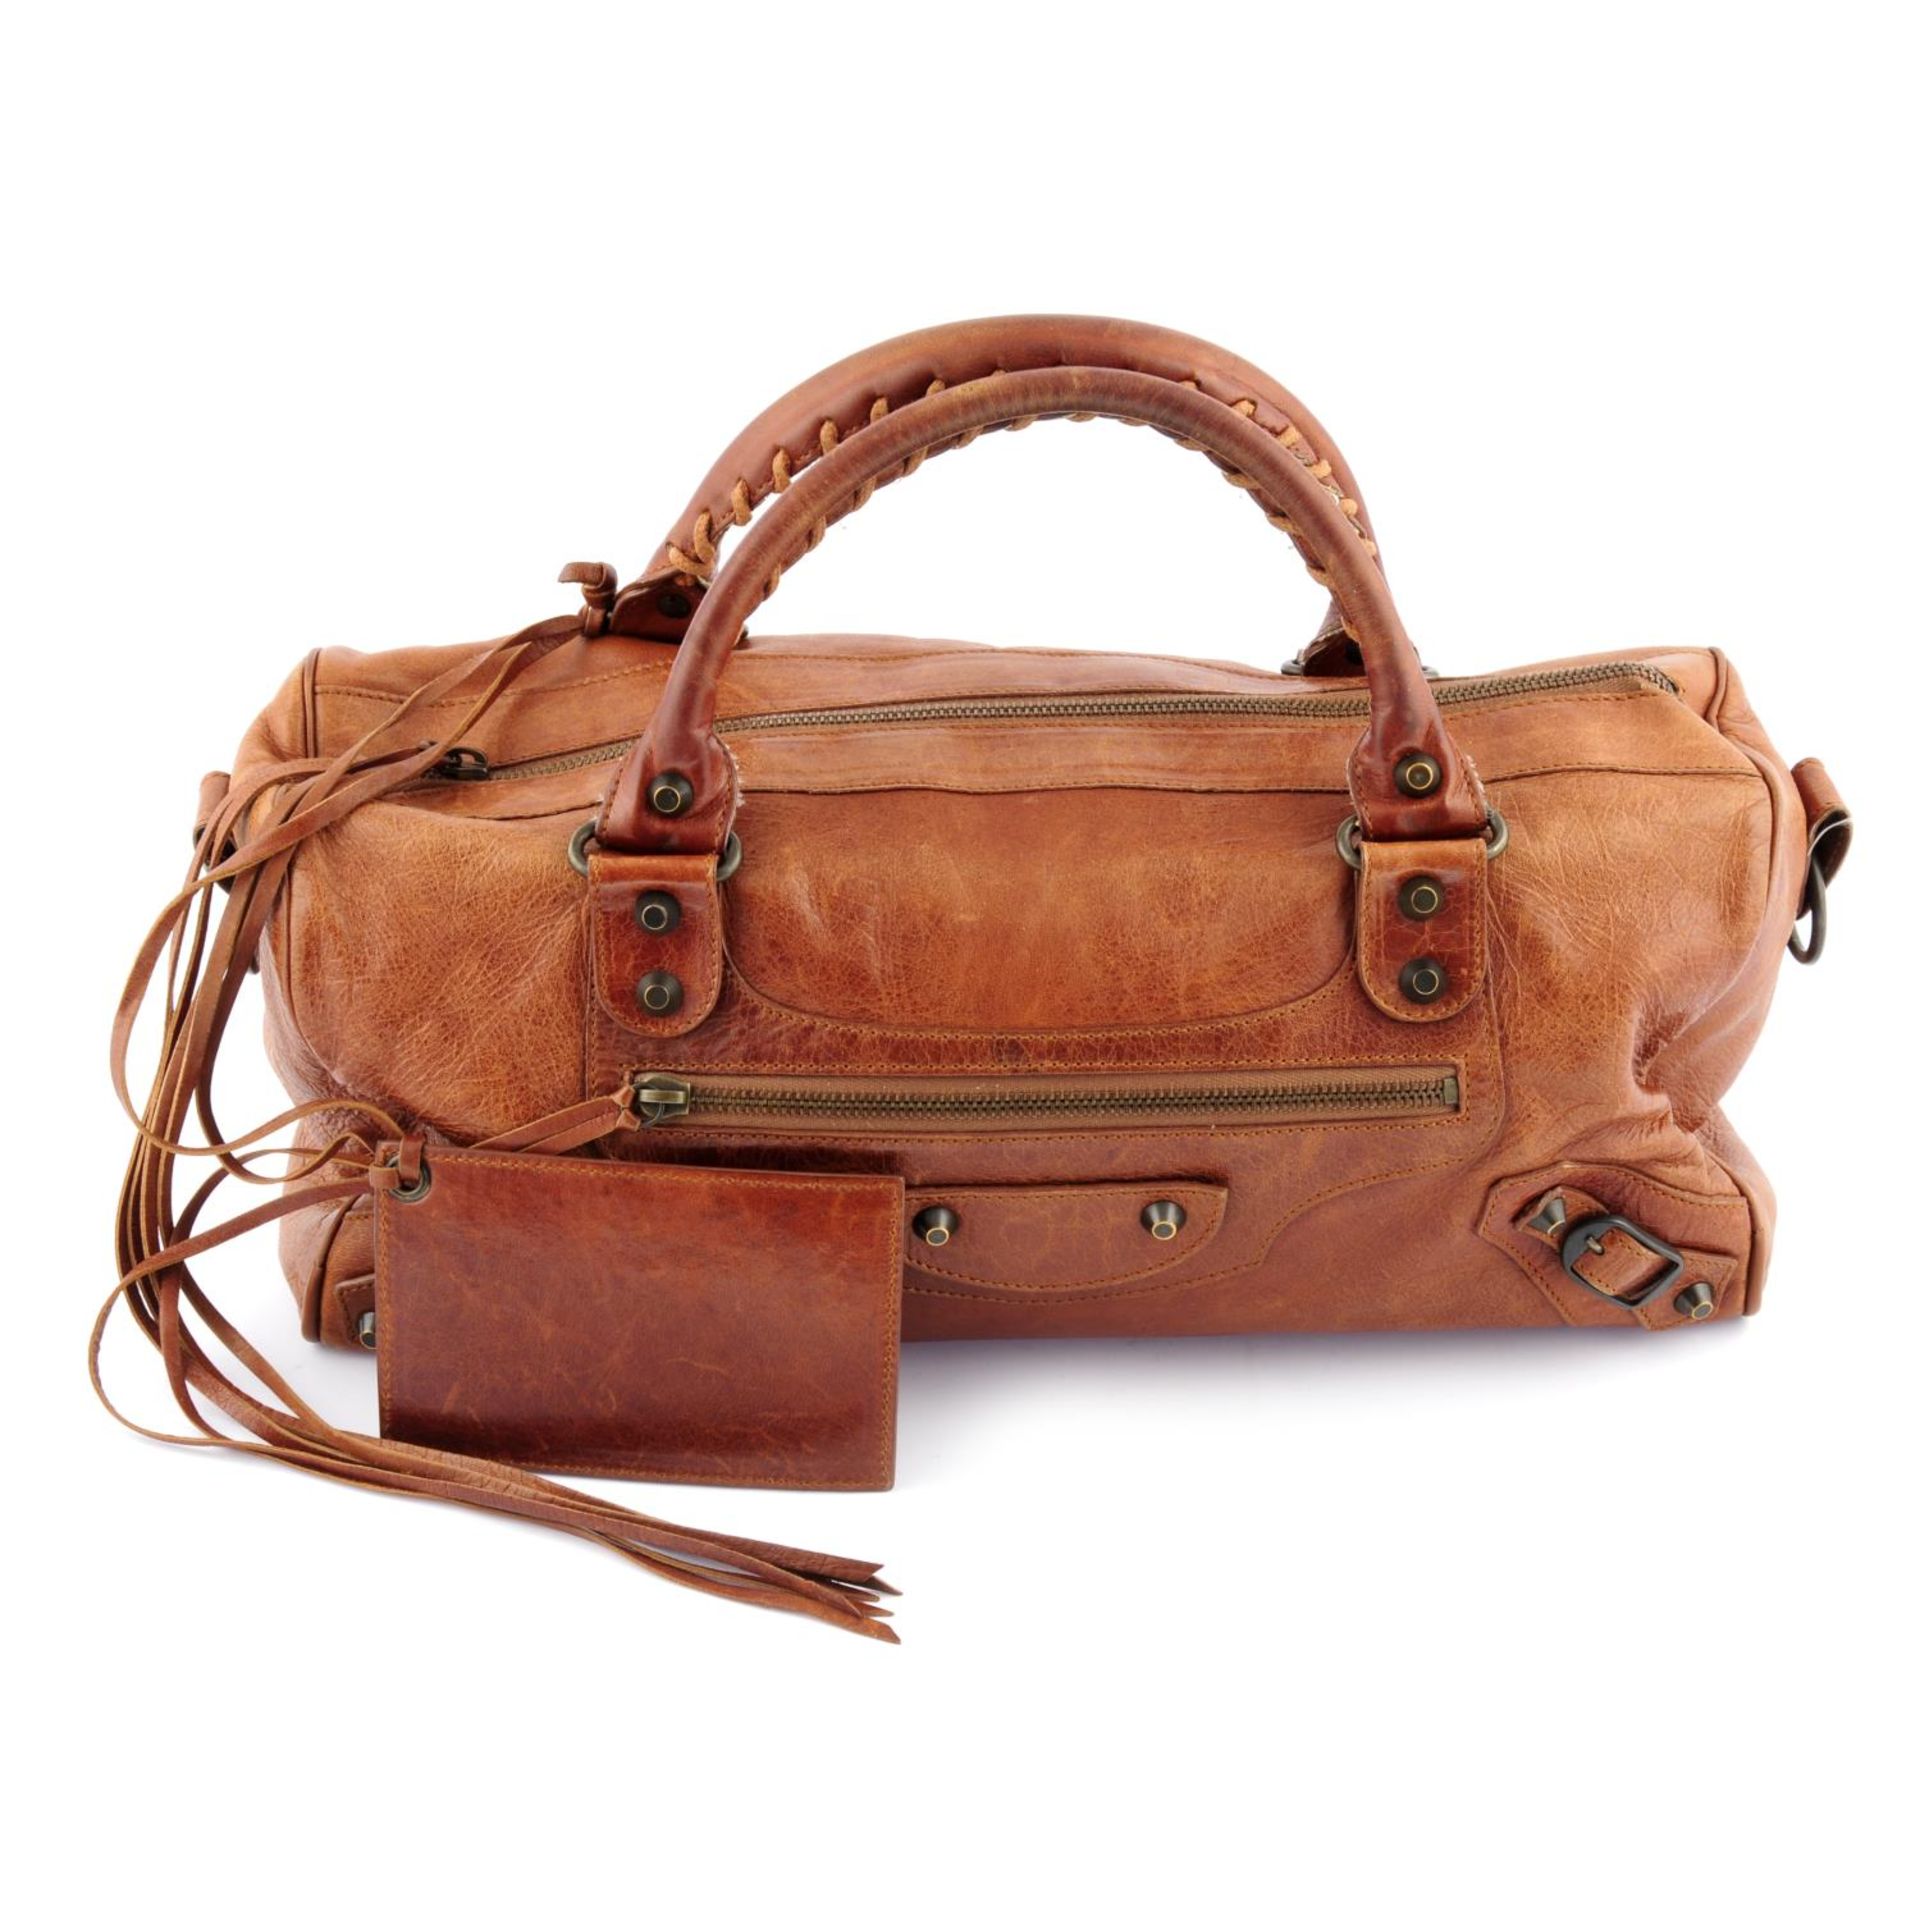 BALENCIAGA - a brown leather Twiggy handbag.